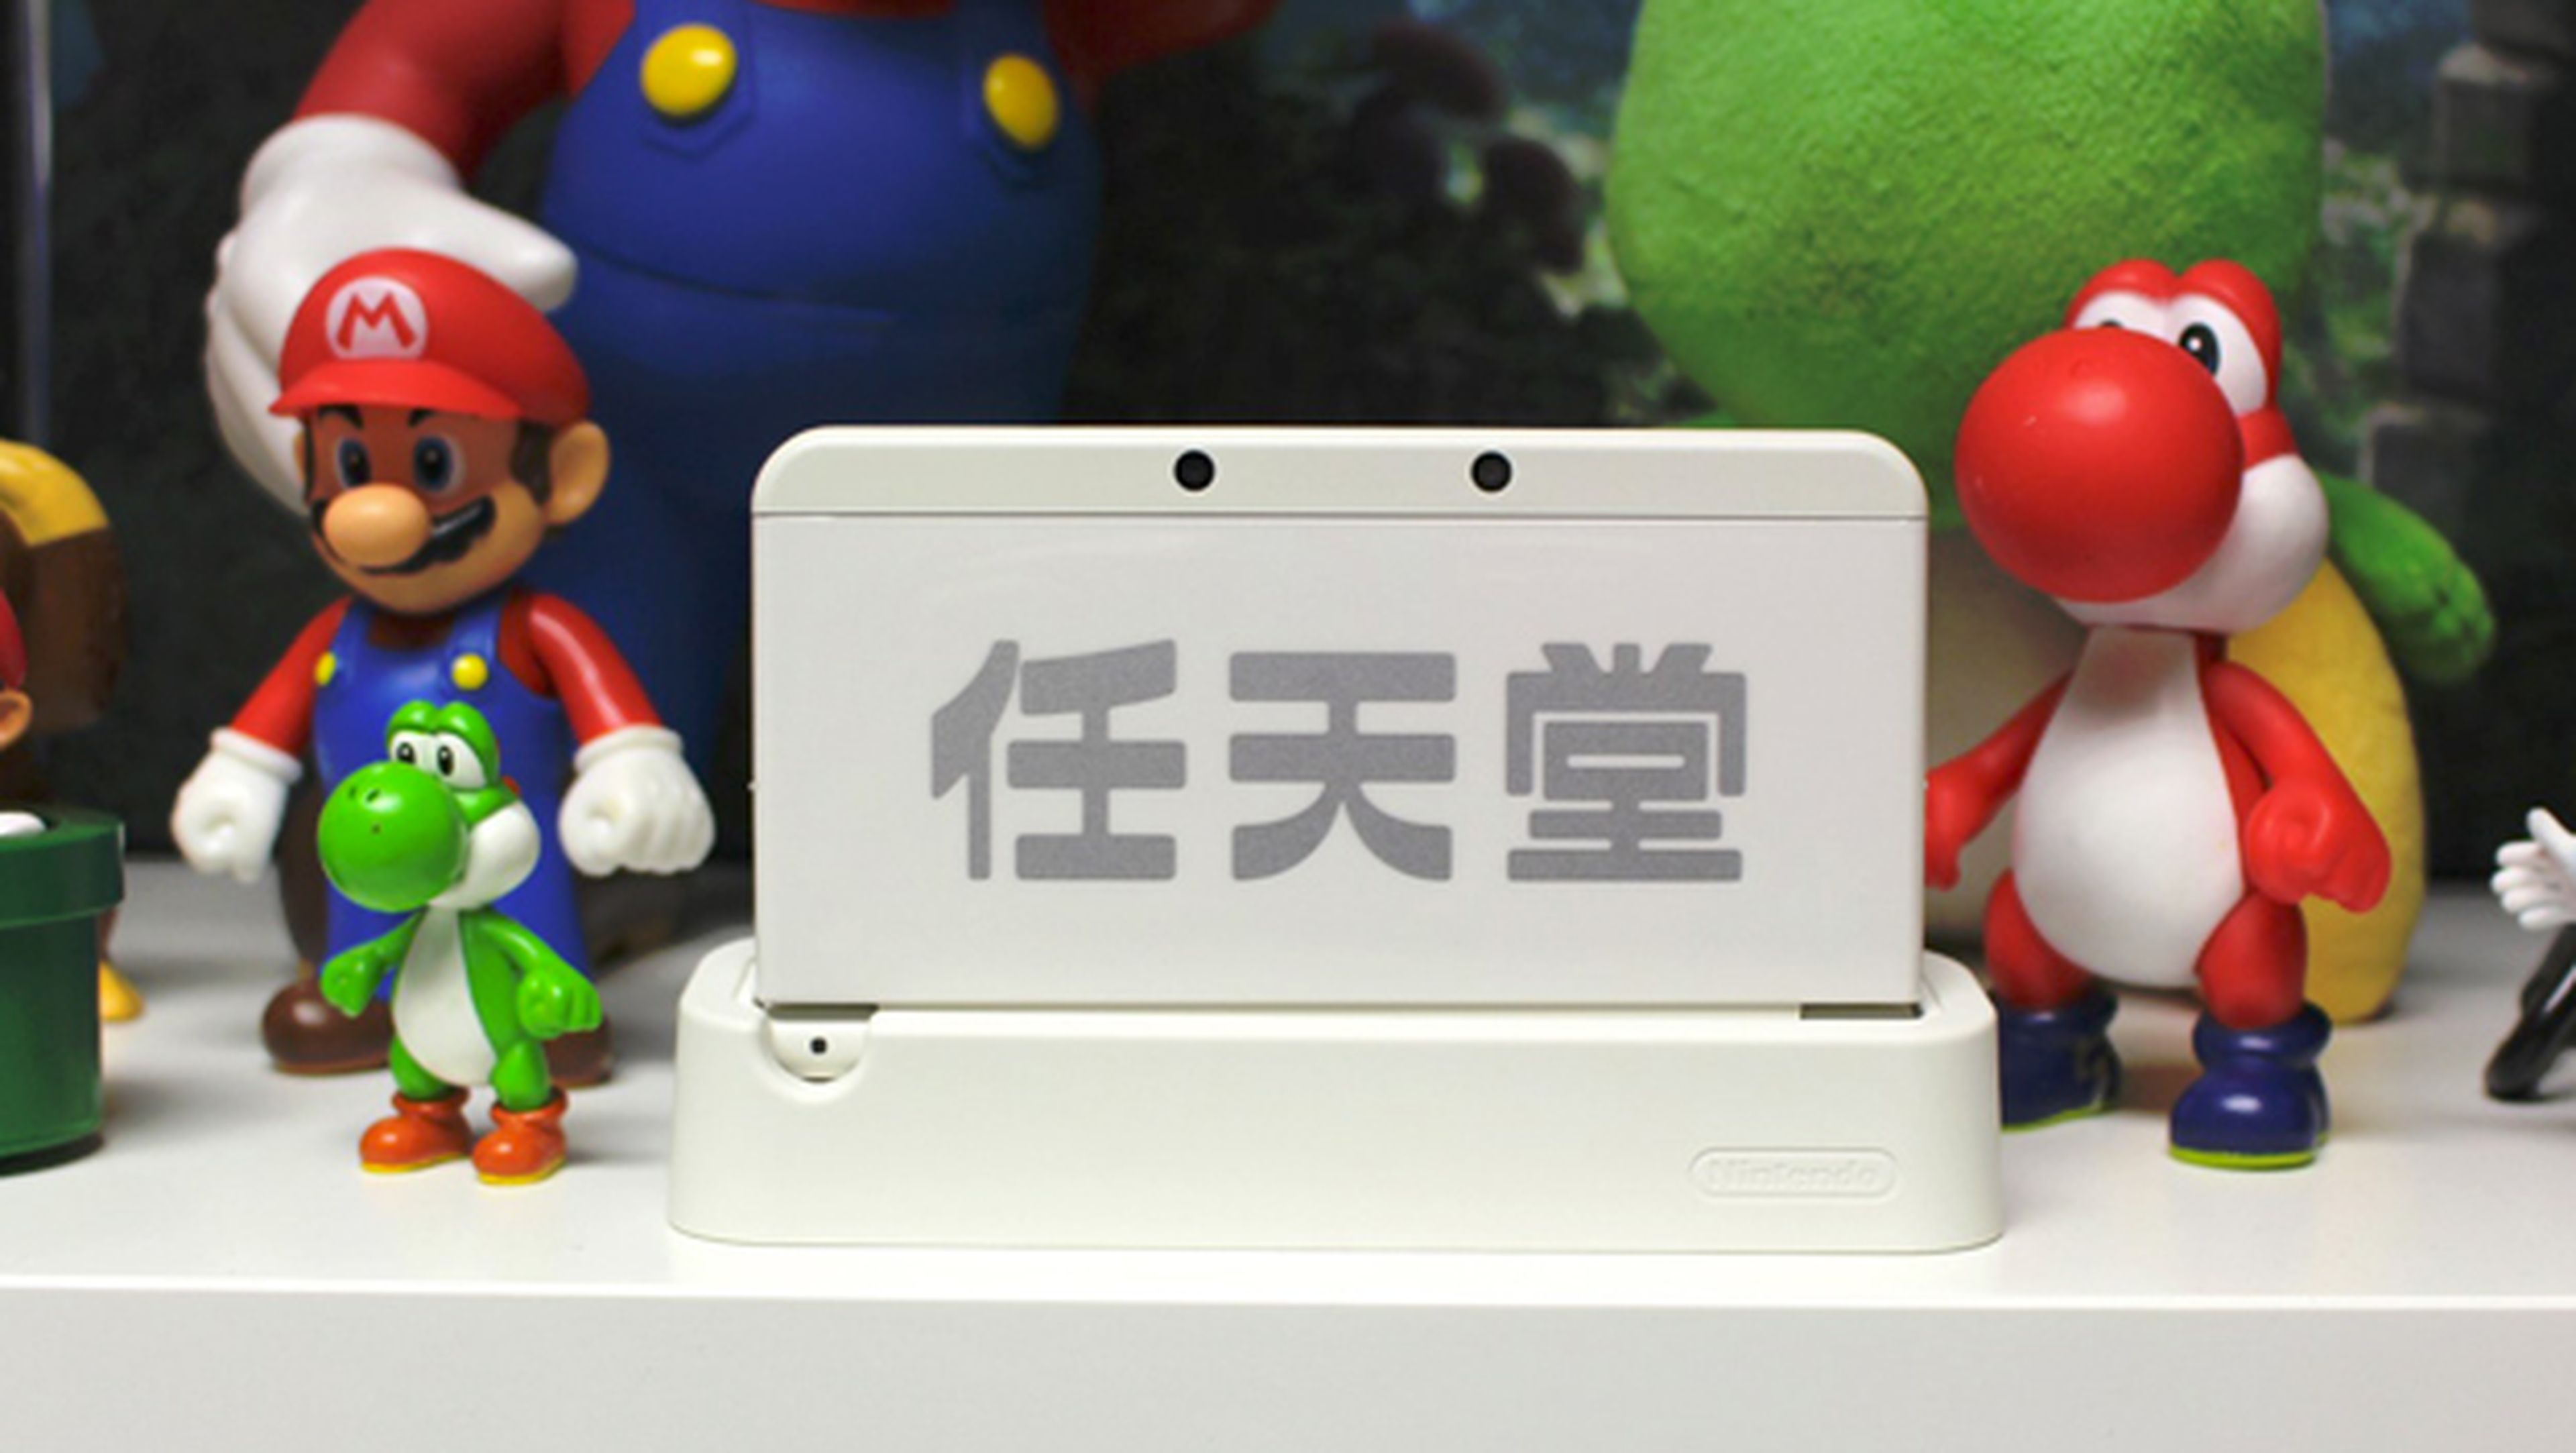 Nintendo 3DS Ambassador Edition